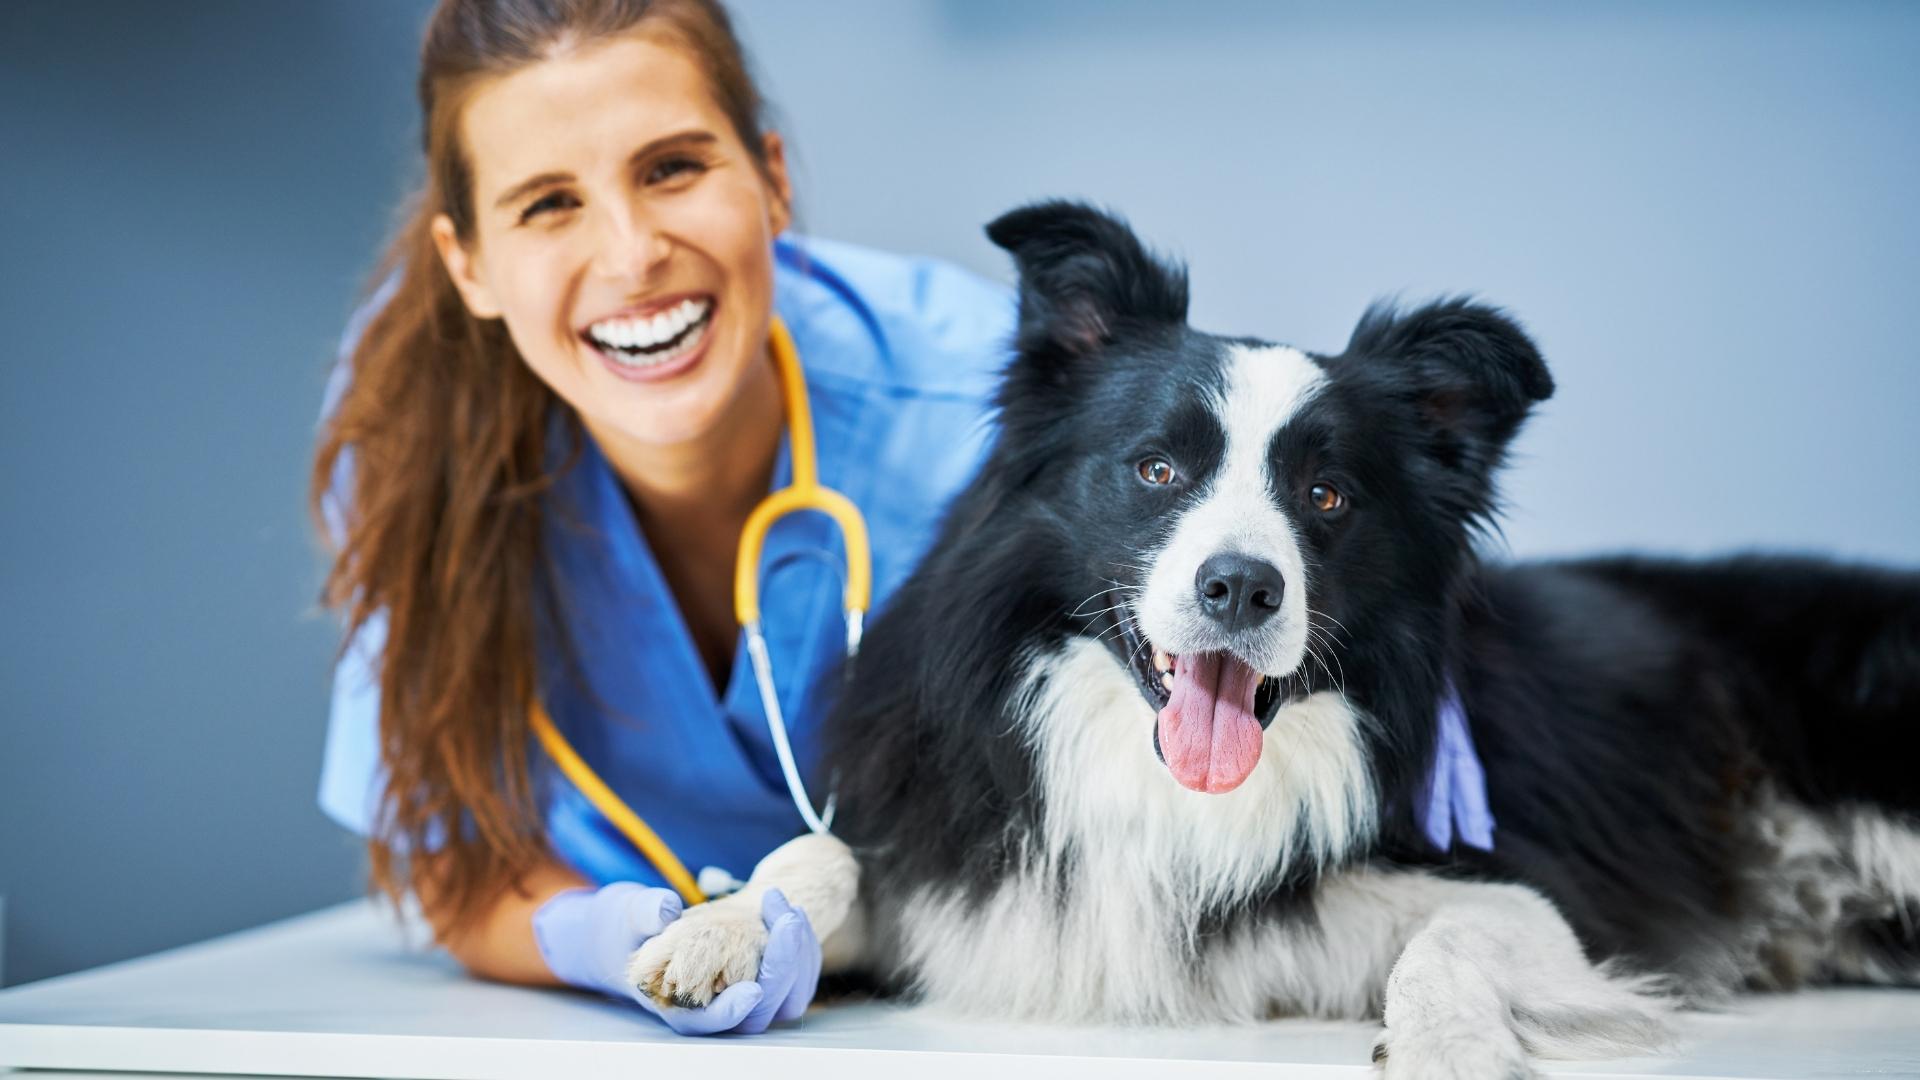 Online Associates in Veterinary Technician - featured image